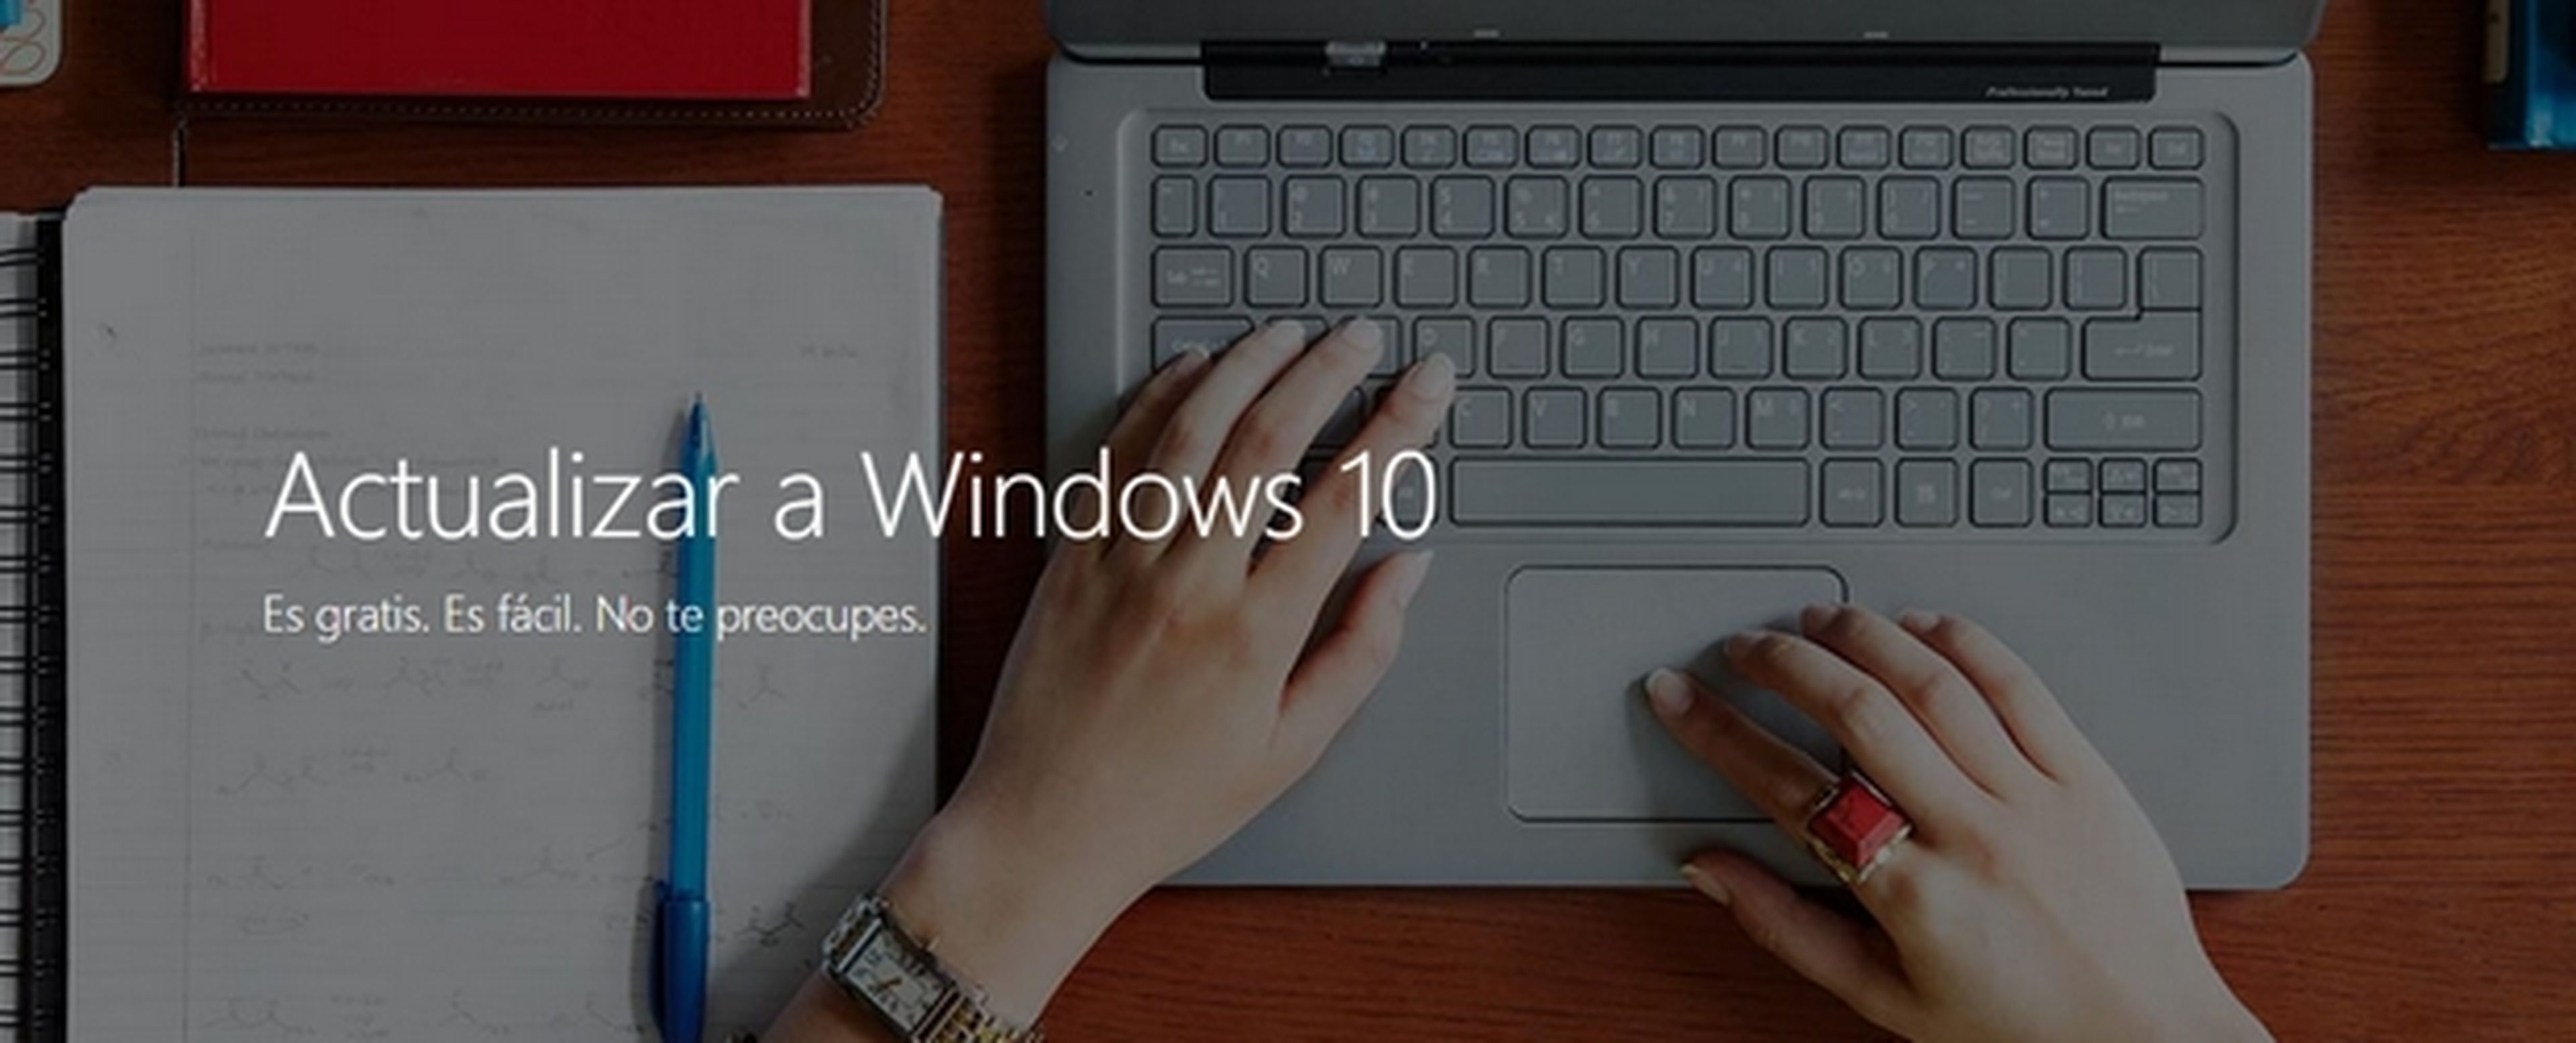 Actualizar a Windows 10